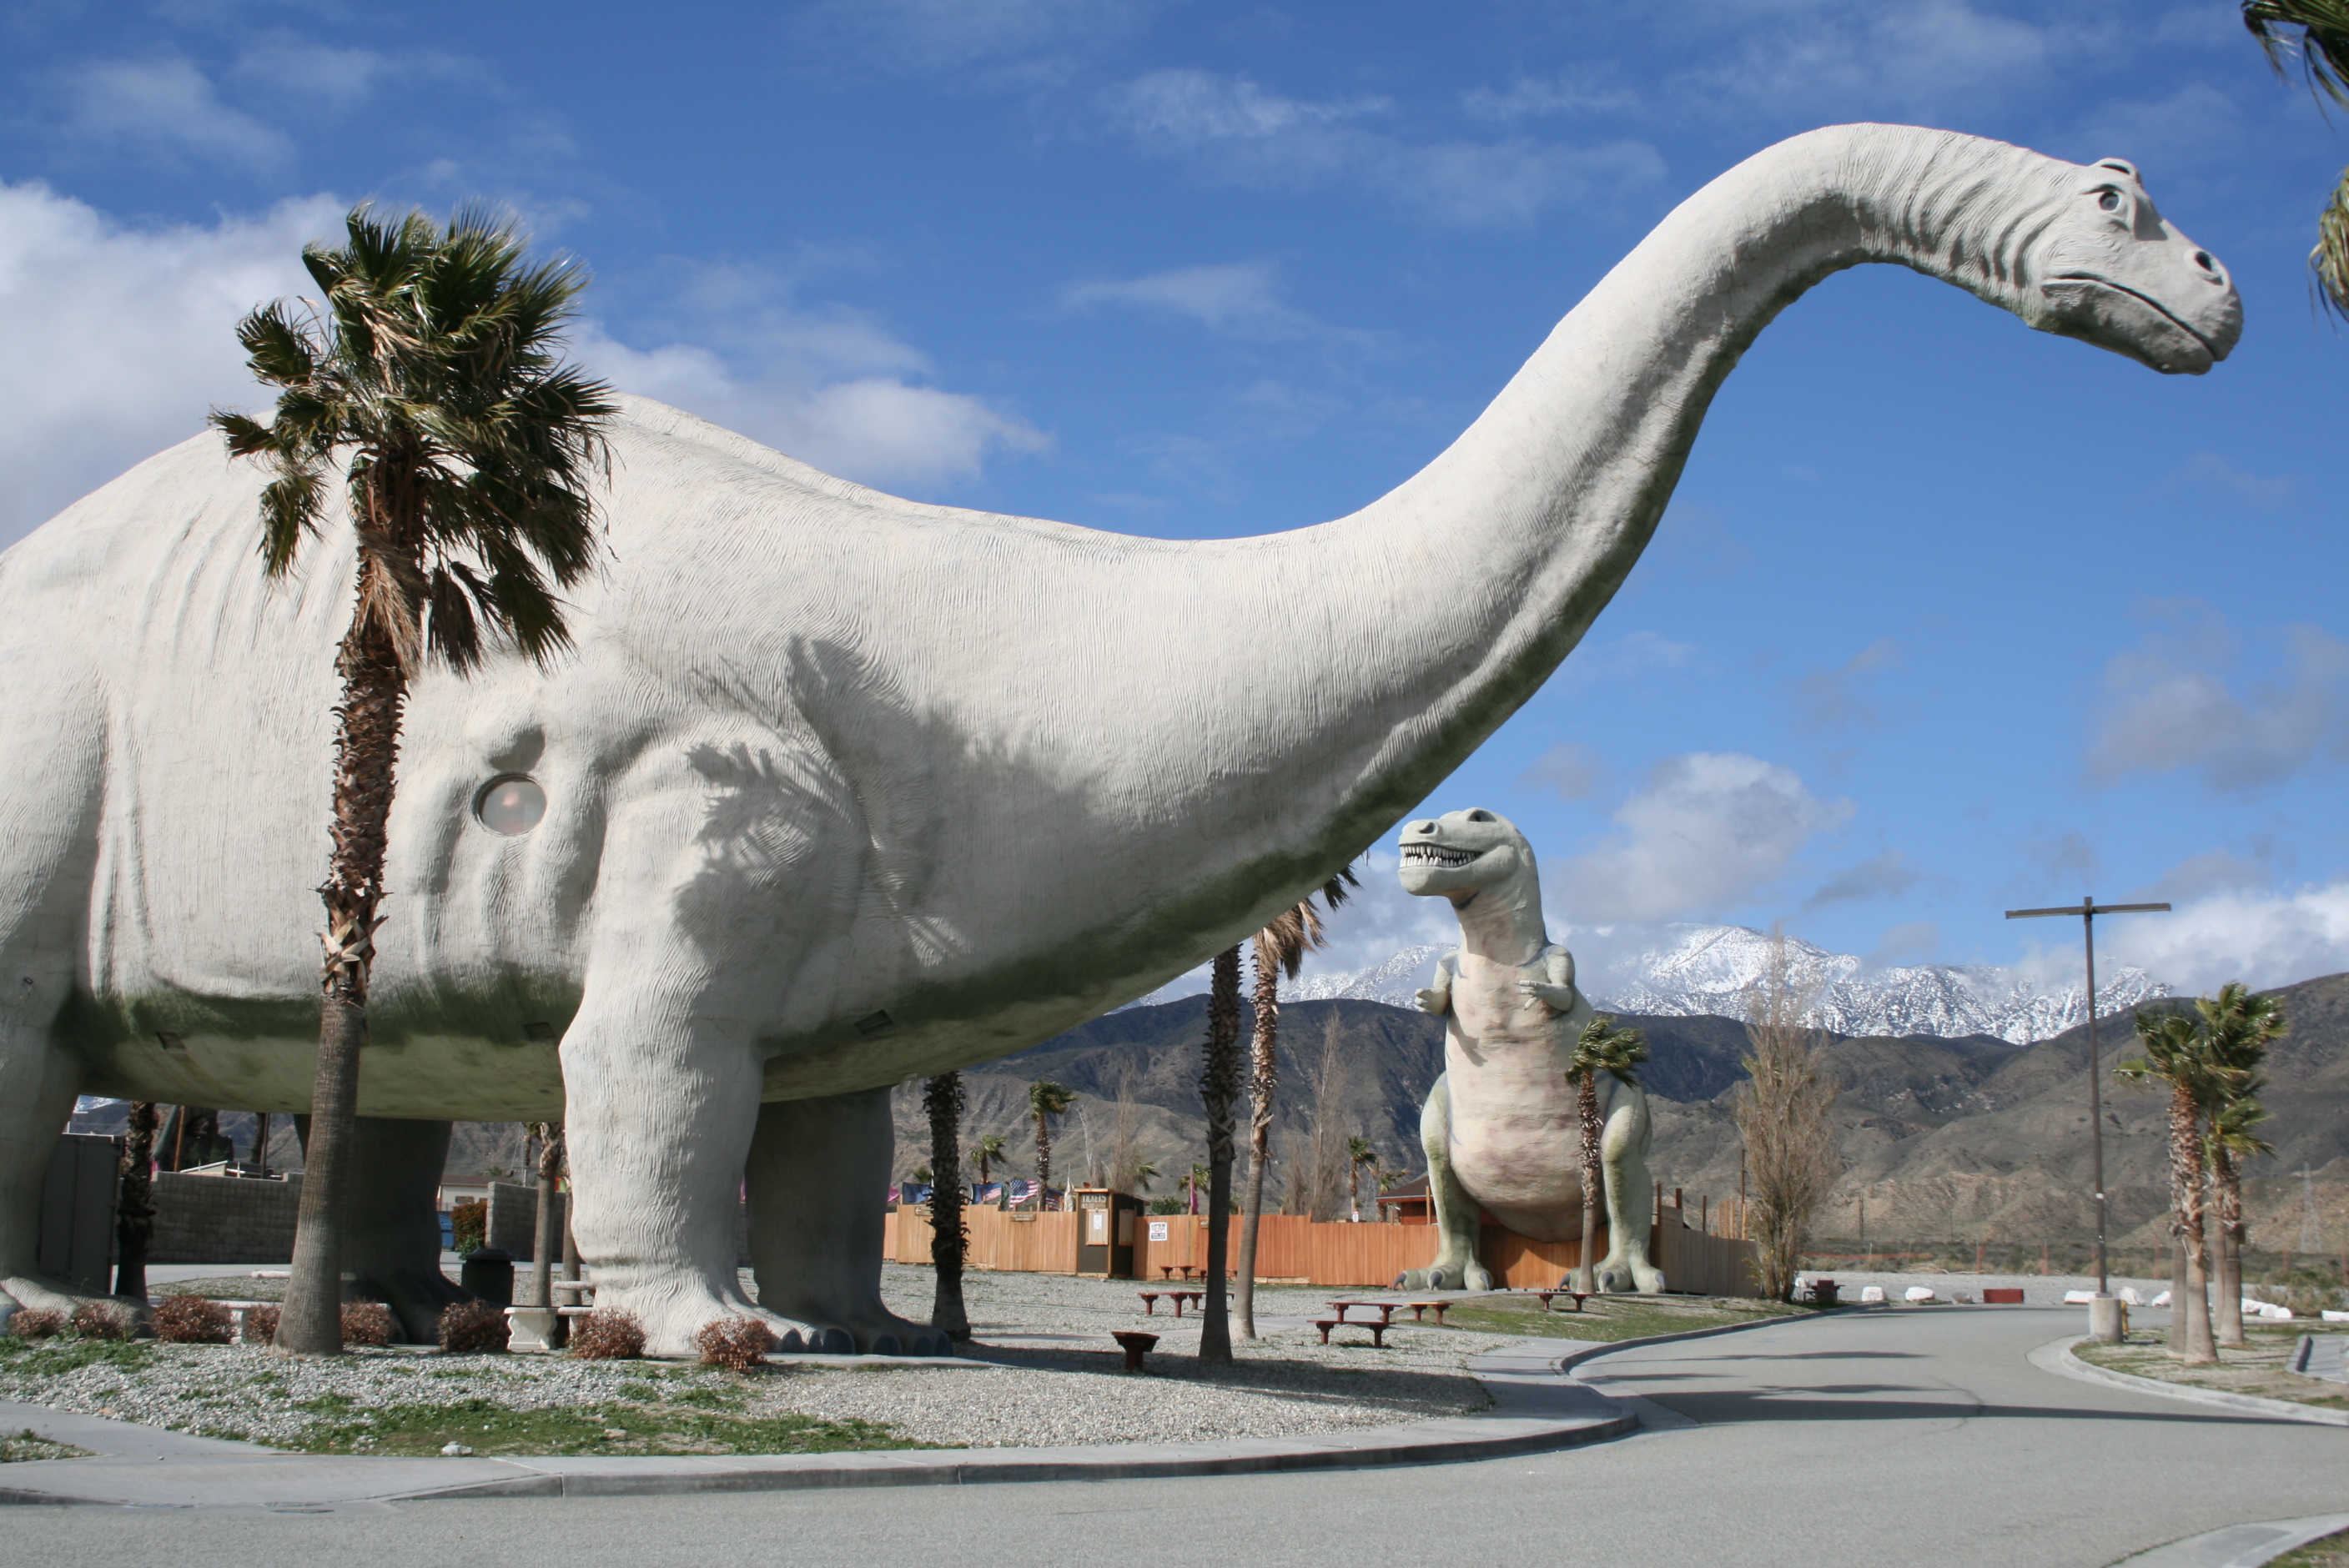 https://upload.wikimedia.org/wikipedia/commons/c/c5/Cabazon-Dinosaurs-2.jpg